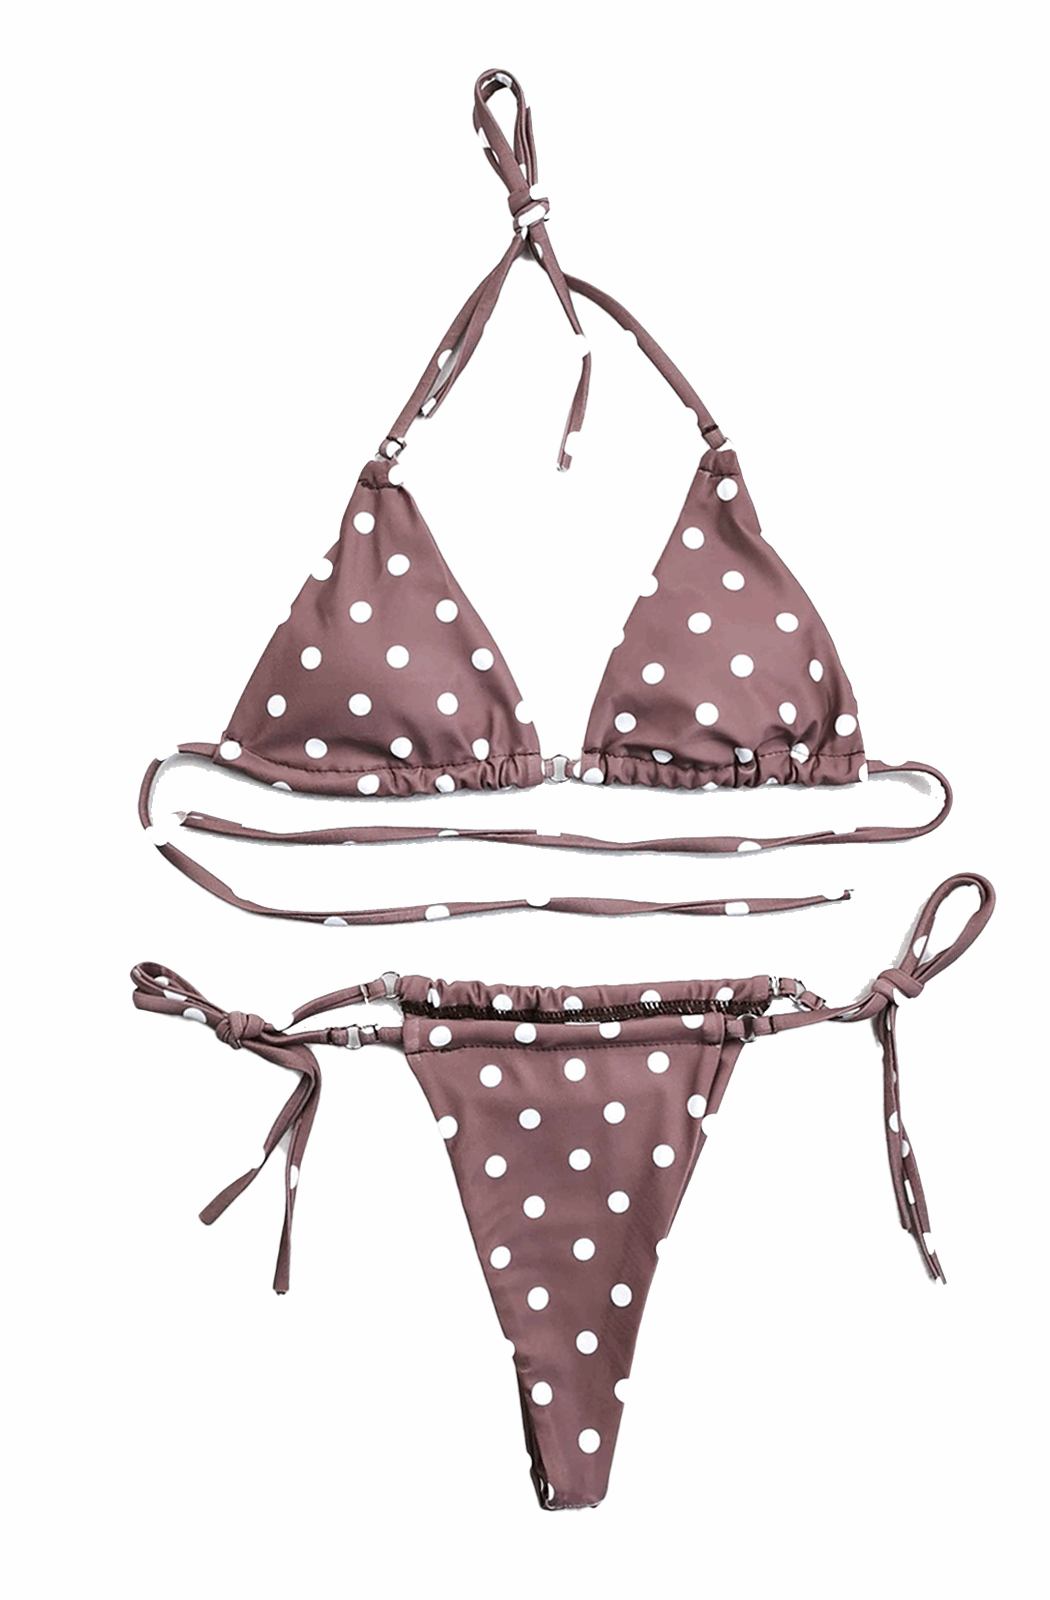 Brown bikini with white polka dot